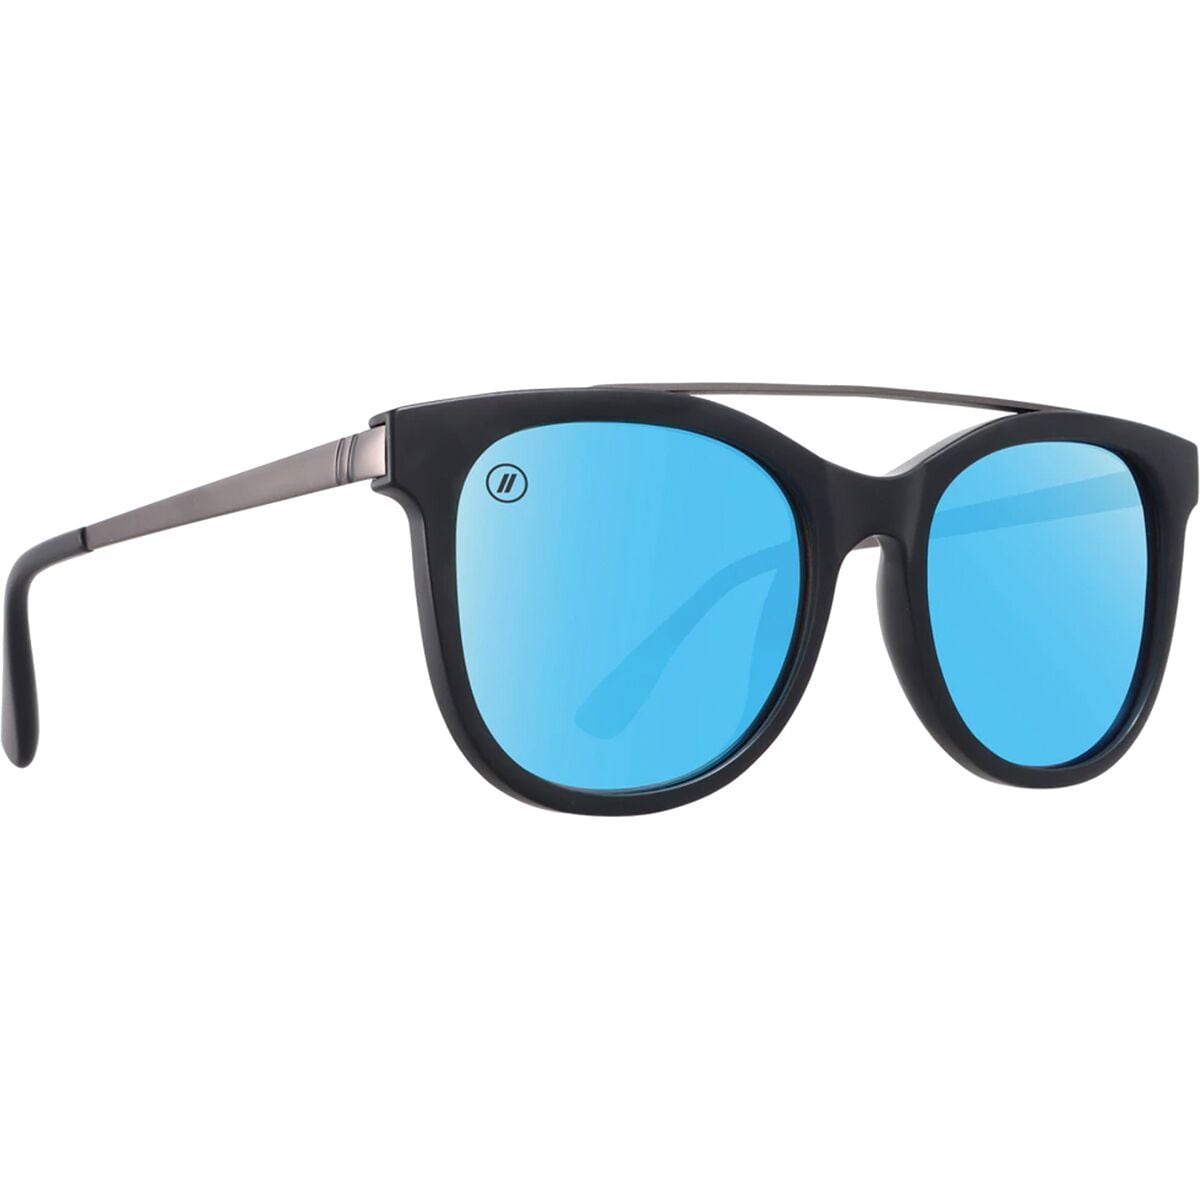 Blenders Eyewear Bling Moon Blue Balboa Polarized Sunglasses